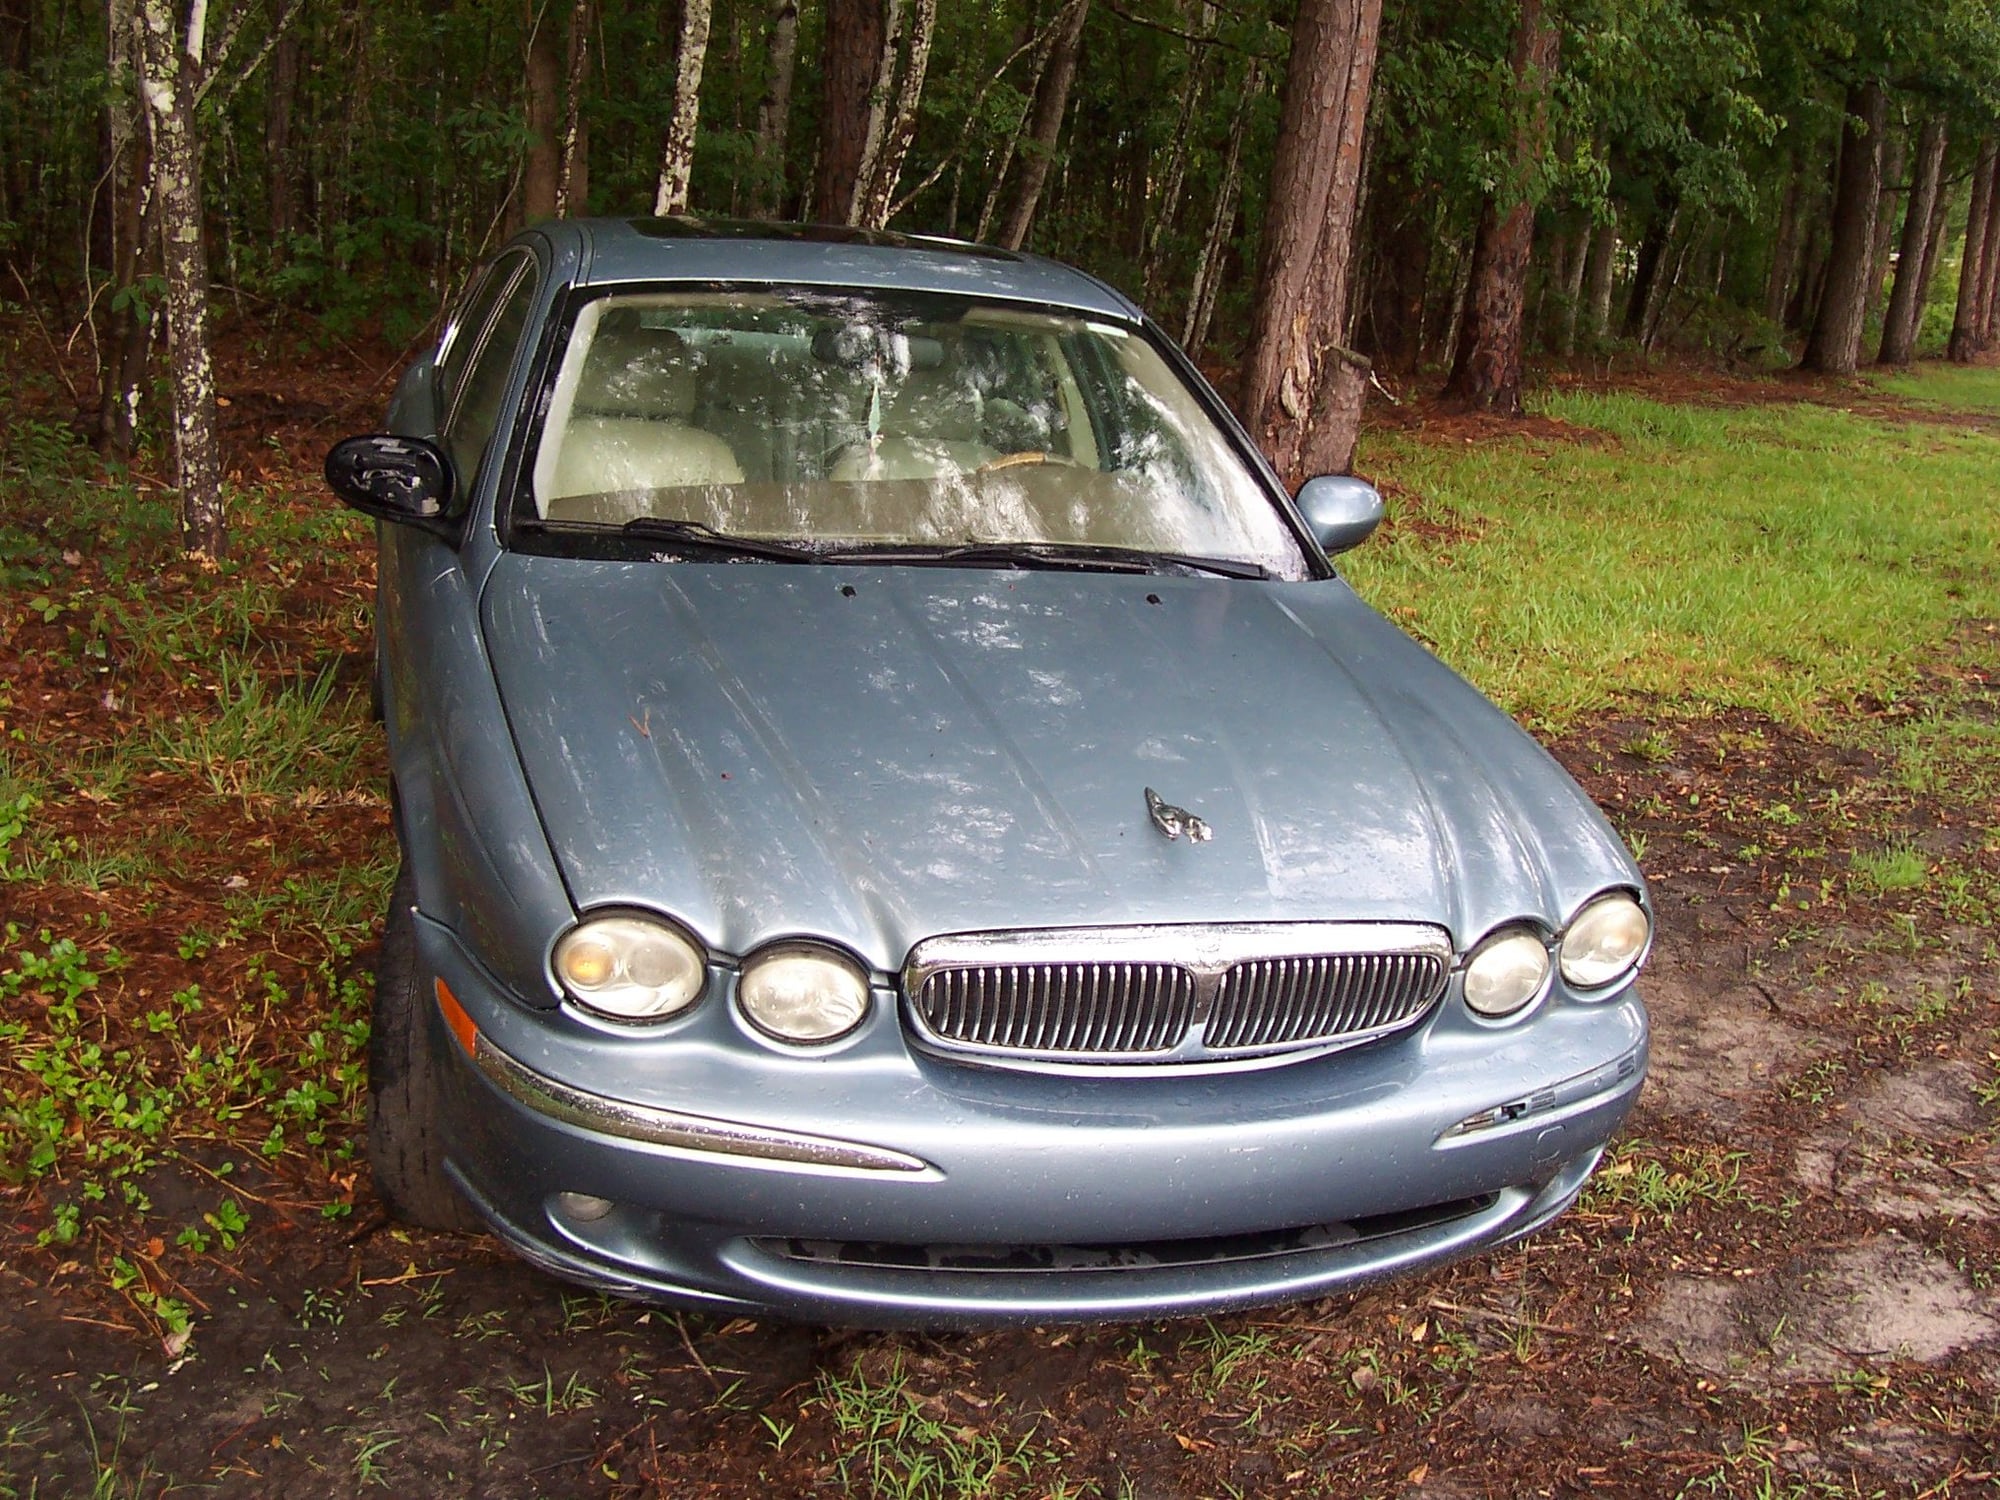 Miscellaneous - Part out 2004 (2002-2008) Jaguar x-type - Used - 2002 to 2008 Jaguar X-Type - Callahan, FL 32011, United States